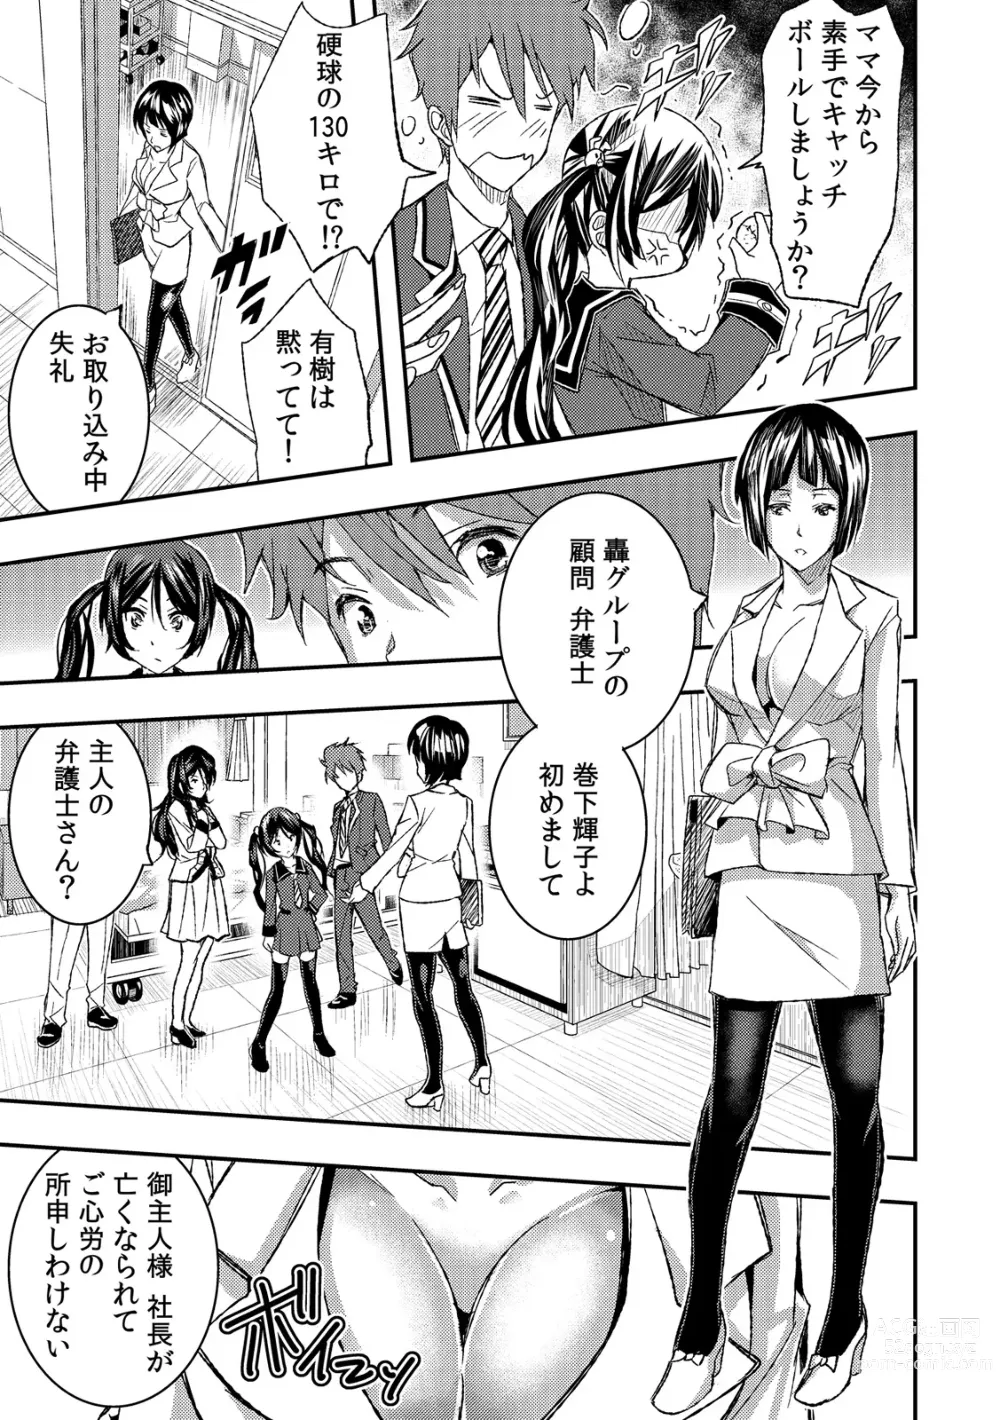 Page 33 of manga Fuuzoku Ittara Osananajimi ga Tsukkomareteita Ken ww 1-2 Full Color